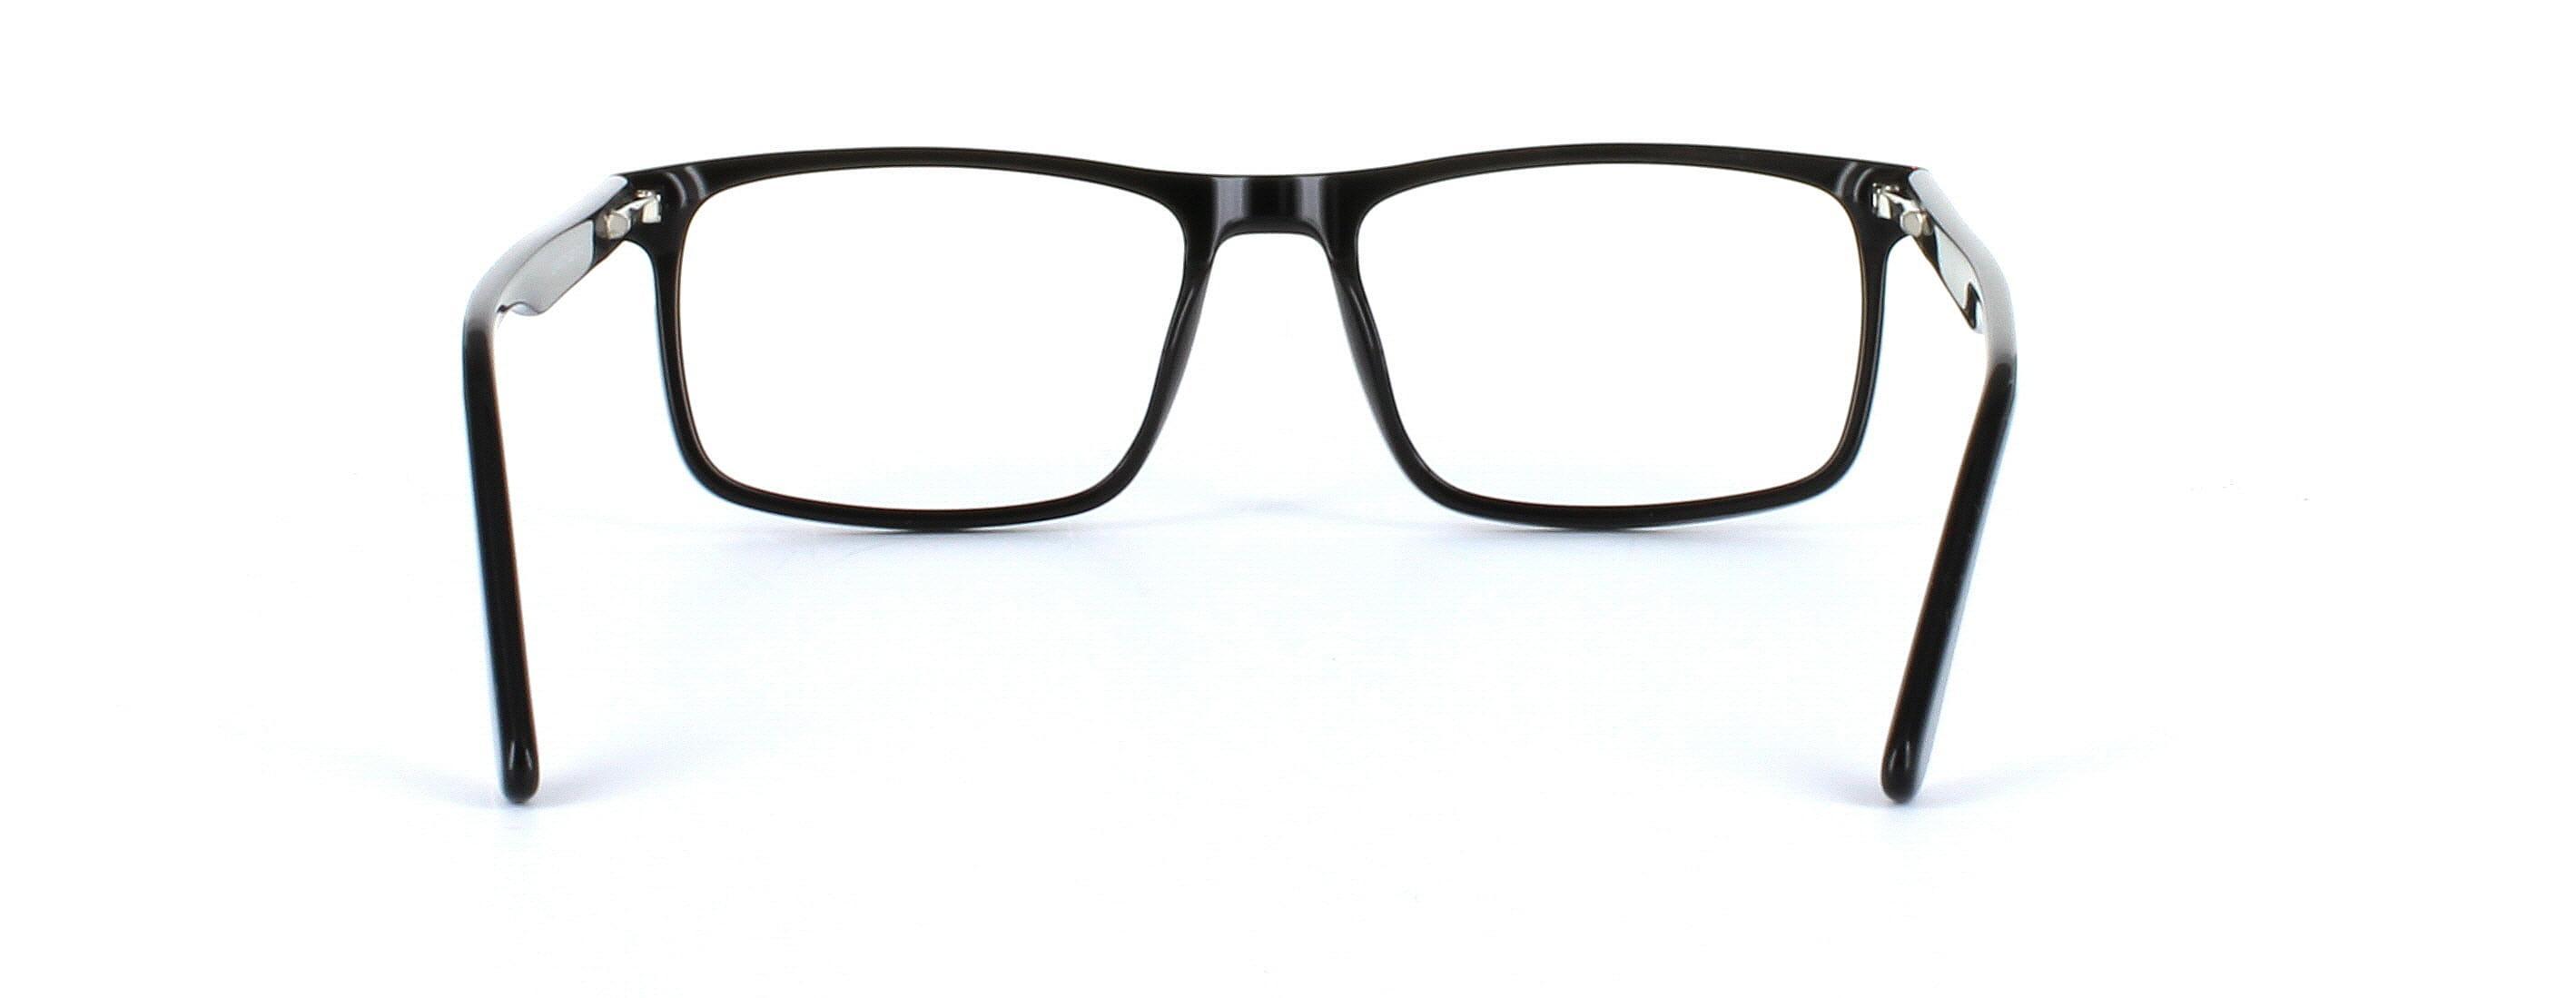 Livadia in shiny black - unisex acetate glasses - image view 3